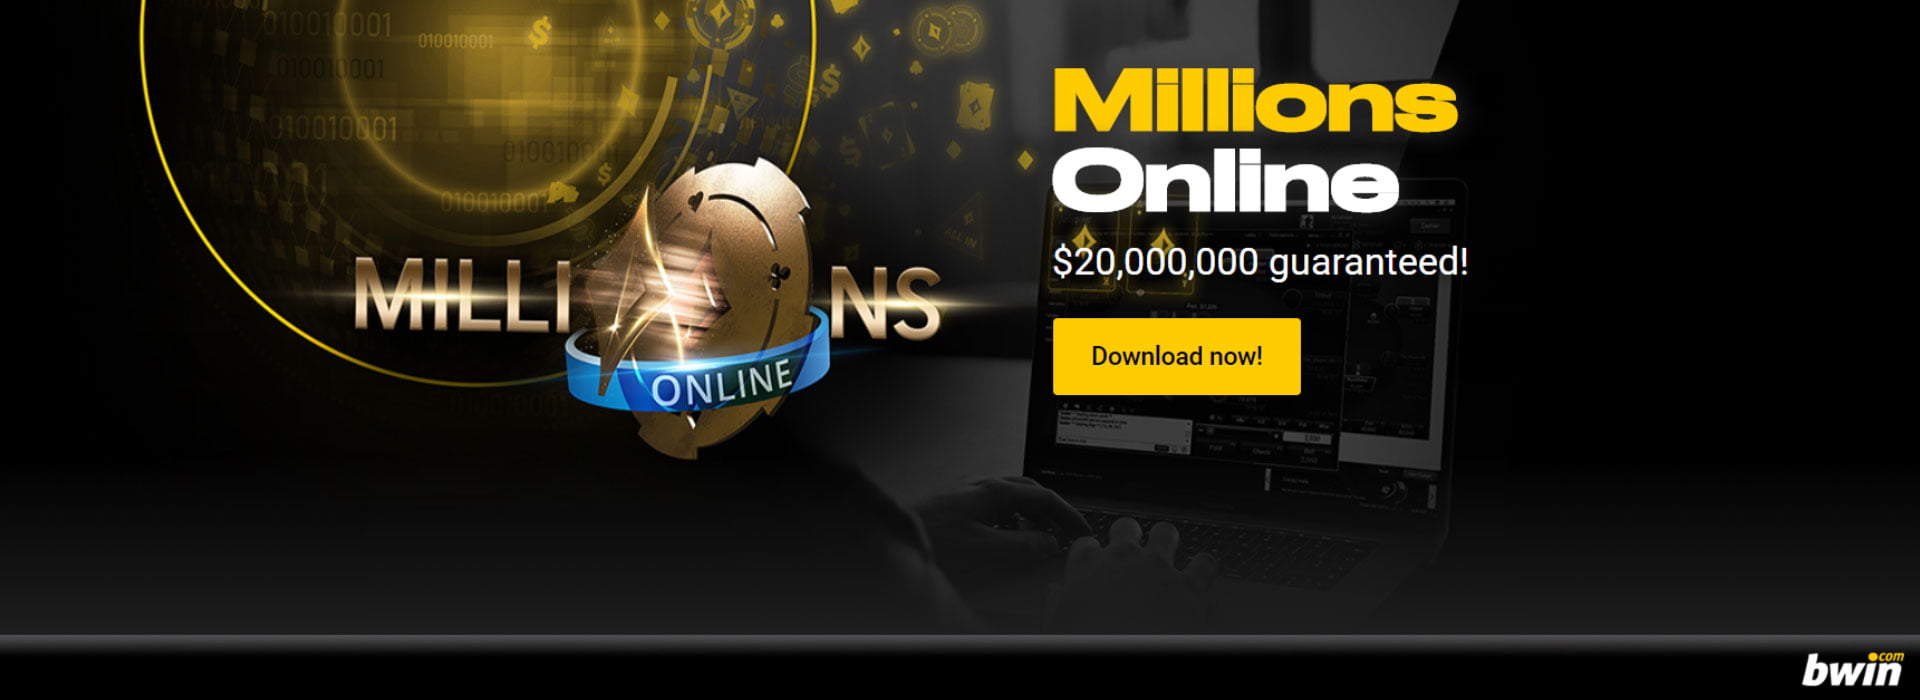 bwin Millions Online $20,000,000 guaranteed!